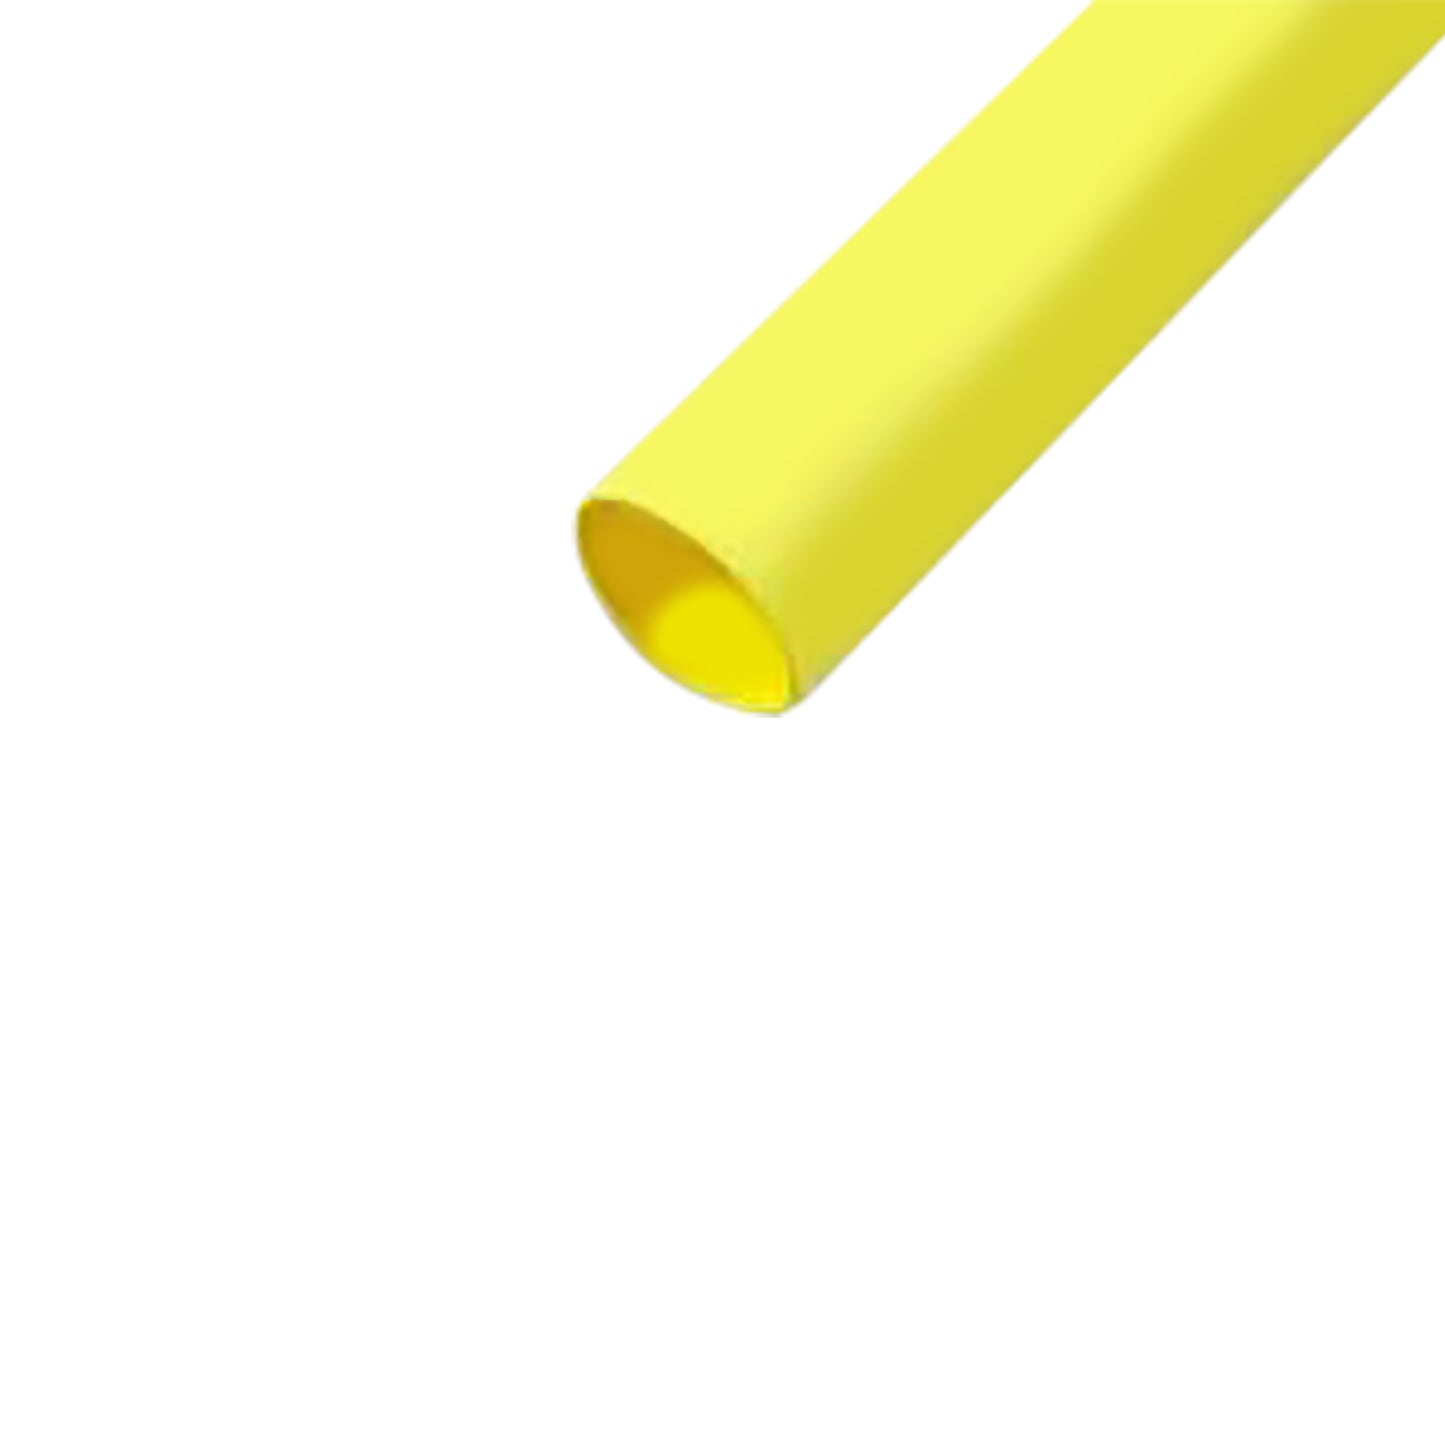 Flexible Thin Single Wall Non-Adhesive Heat Shrink Tubing 2:1 Yellow 1/2" ID - 48" Inch 4 Pack